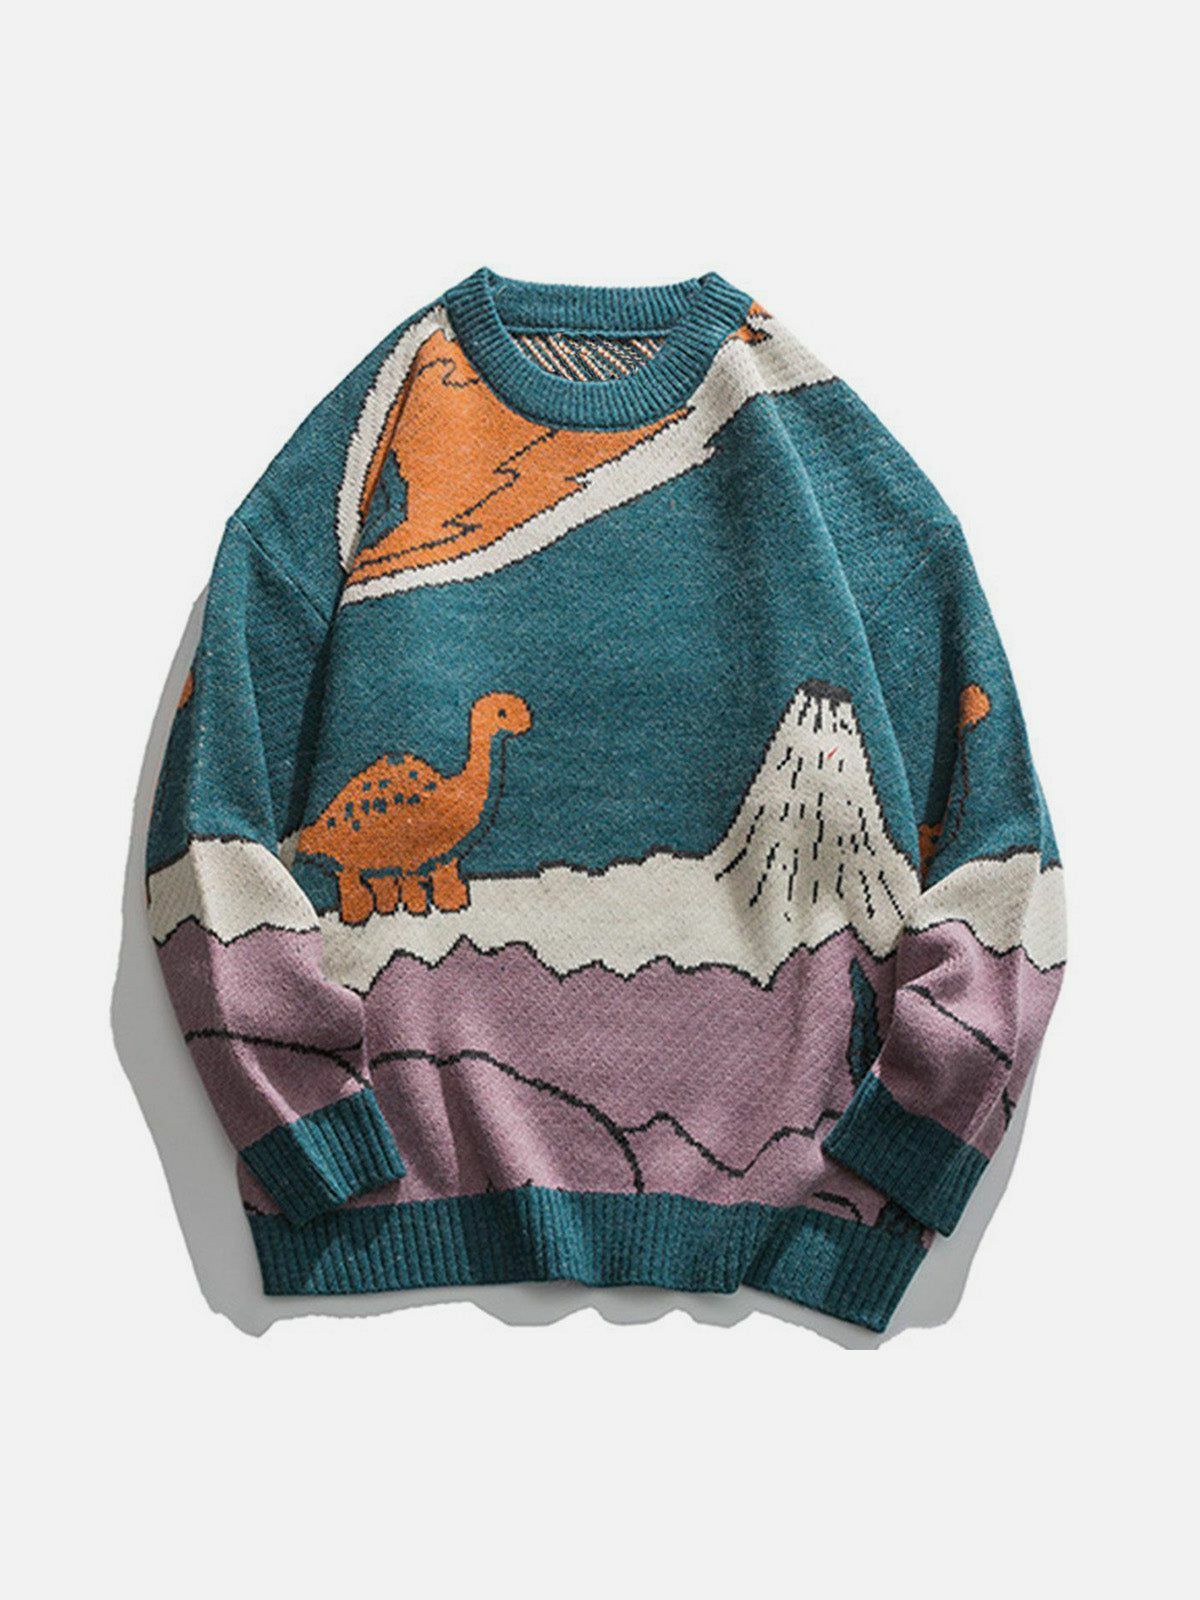 dino print knit sweater quirky & retro streetwear charm 6980